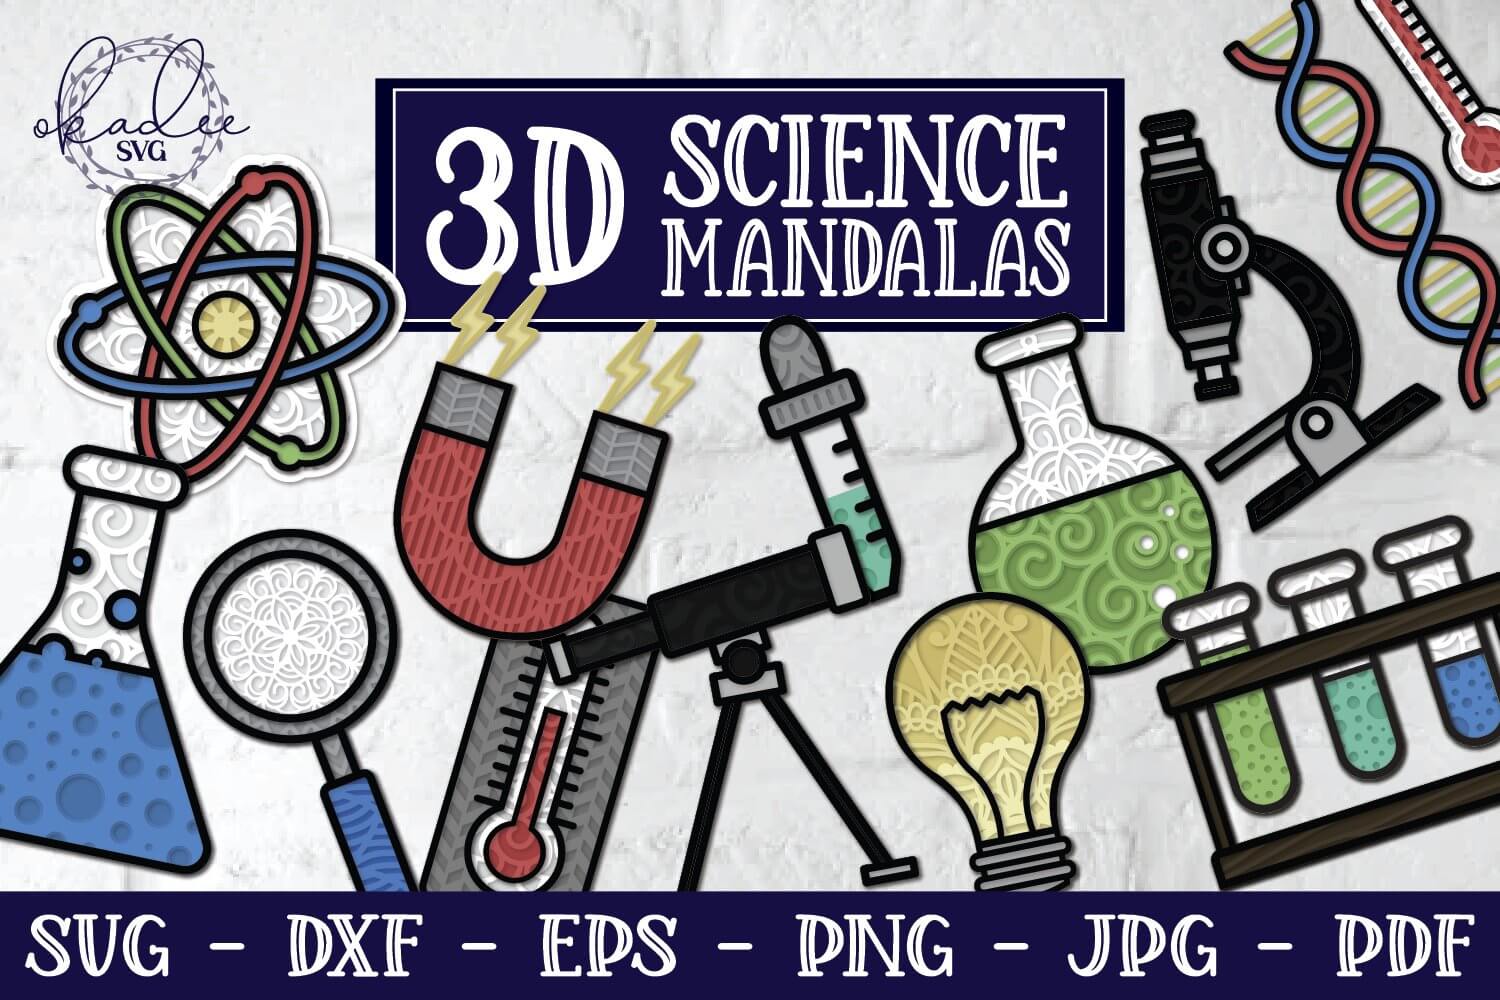 3D scientific mandala with an interesting design.